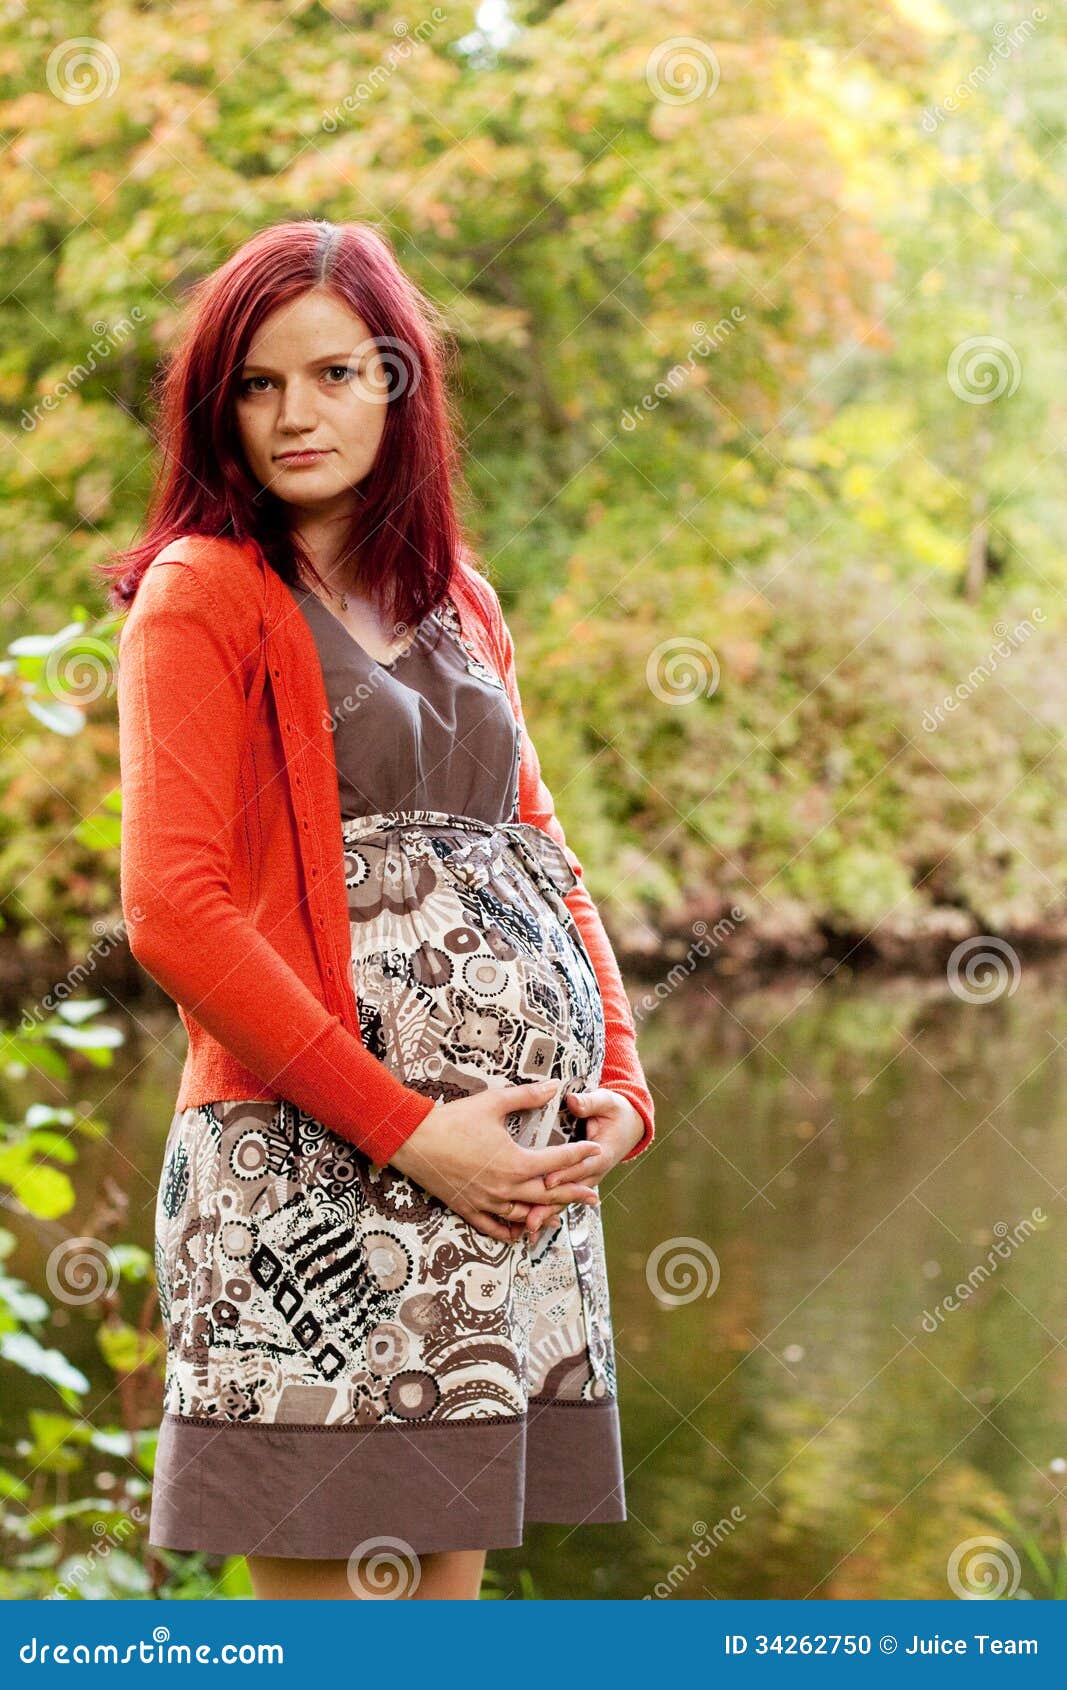 Pregnant Woman Walking In Autumn Park Stock Photo - Image ...